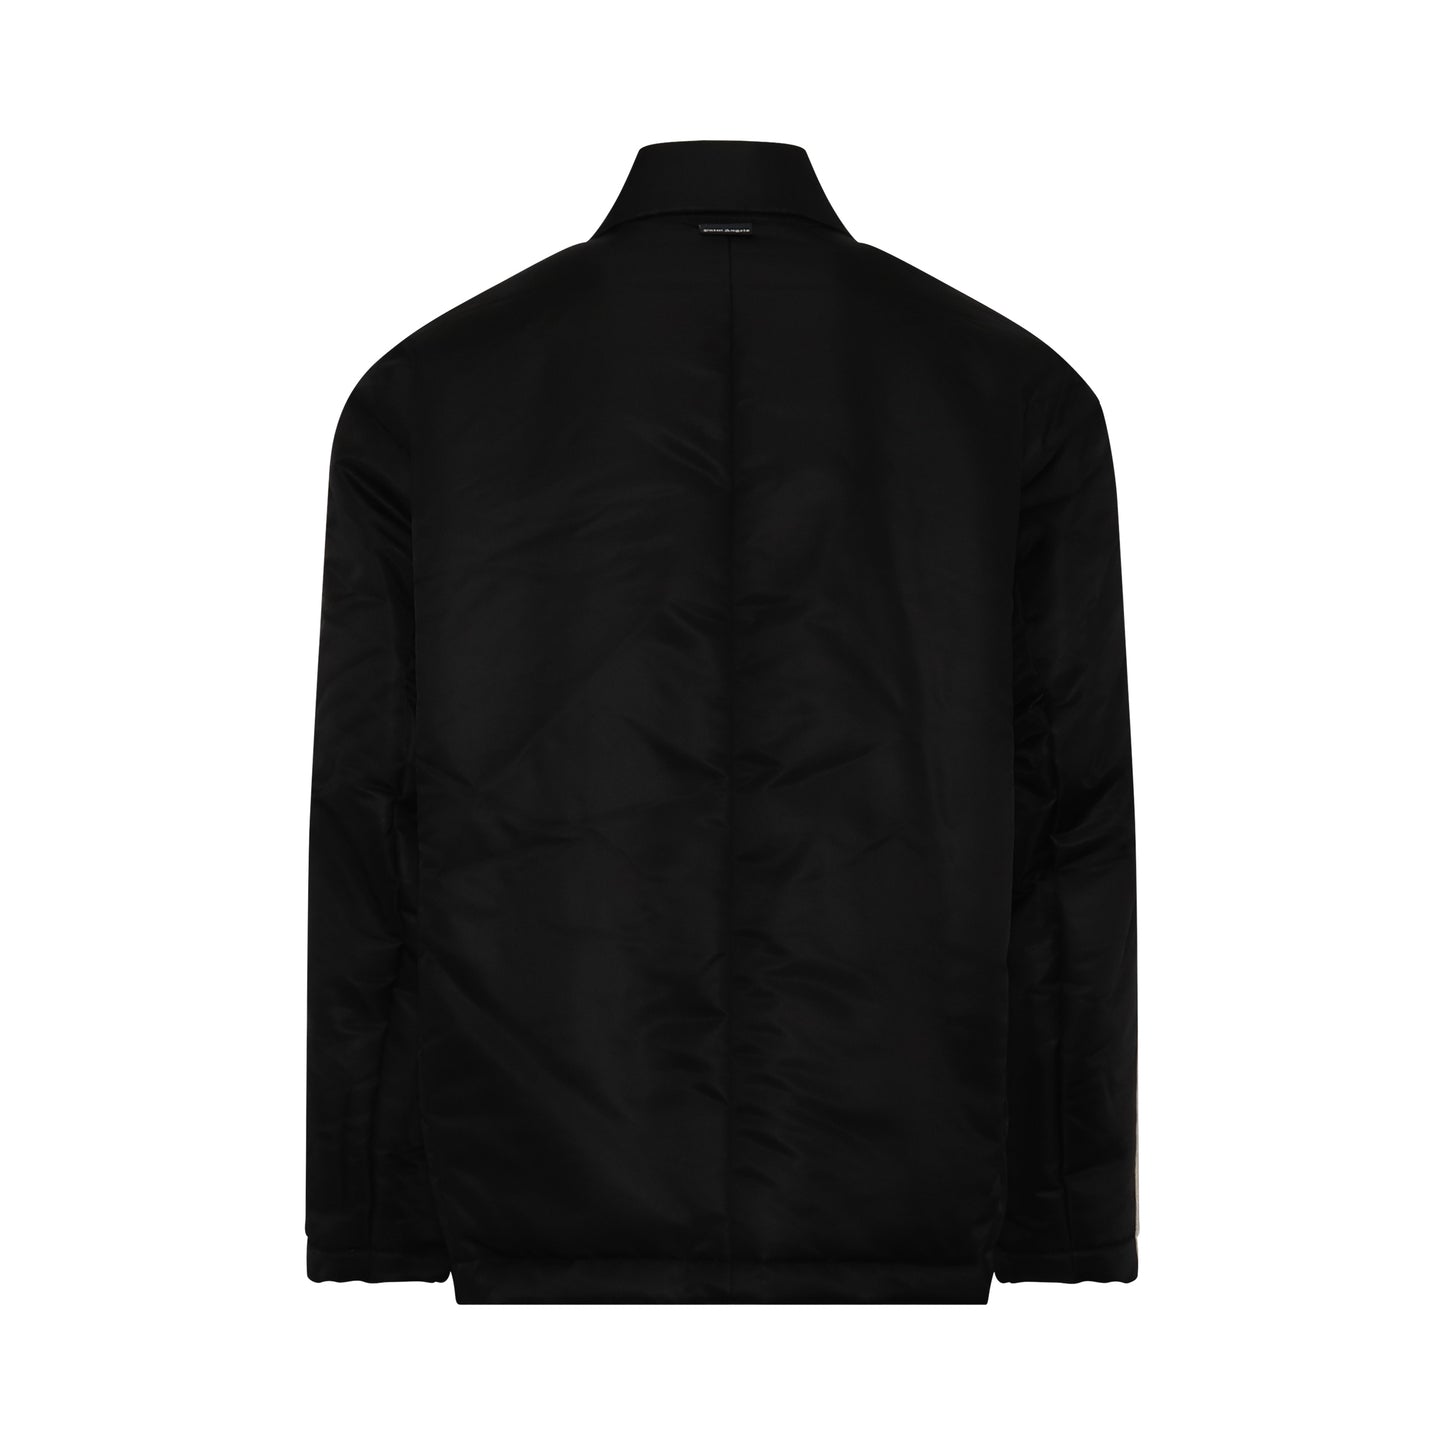 Pxp Puffer Jacket in Black